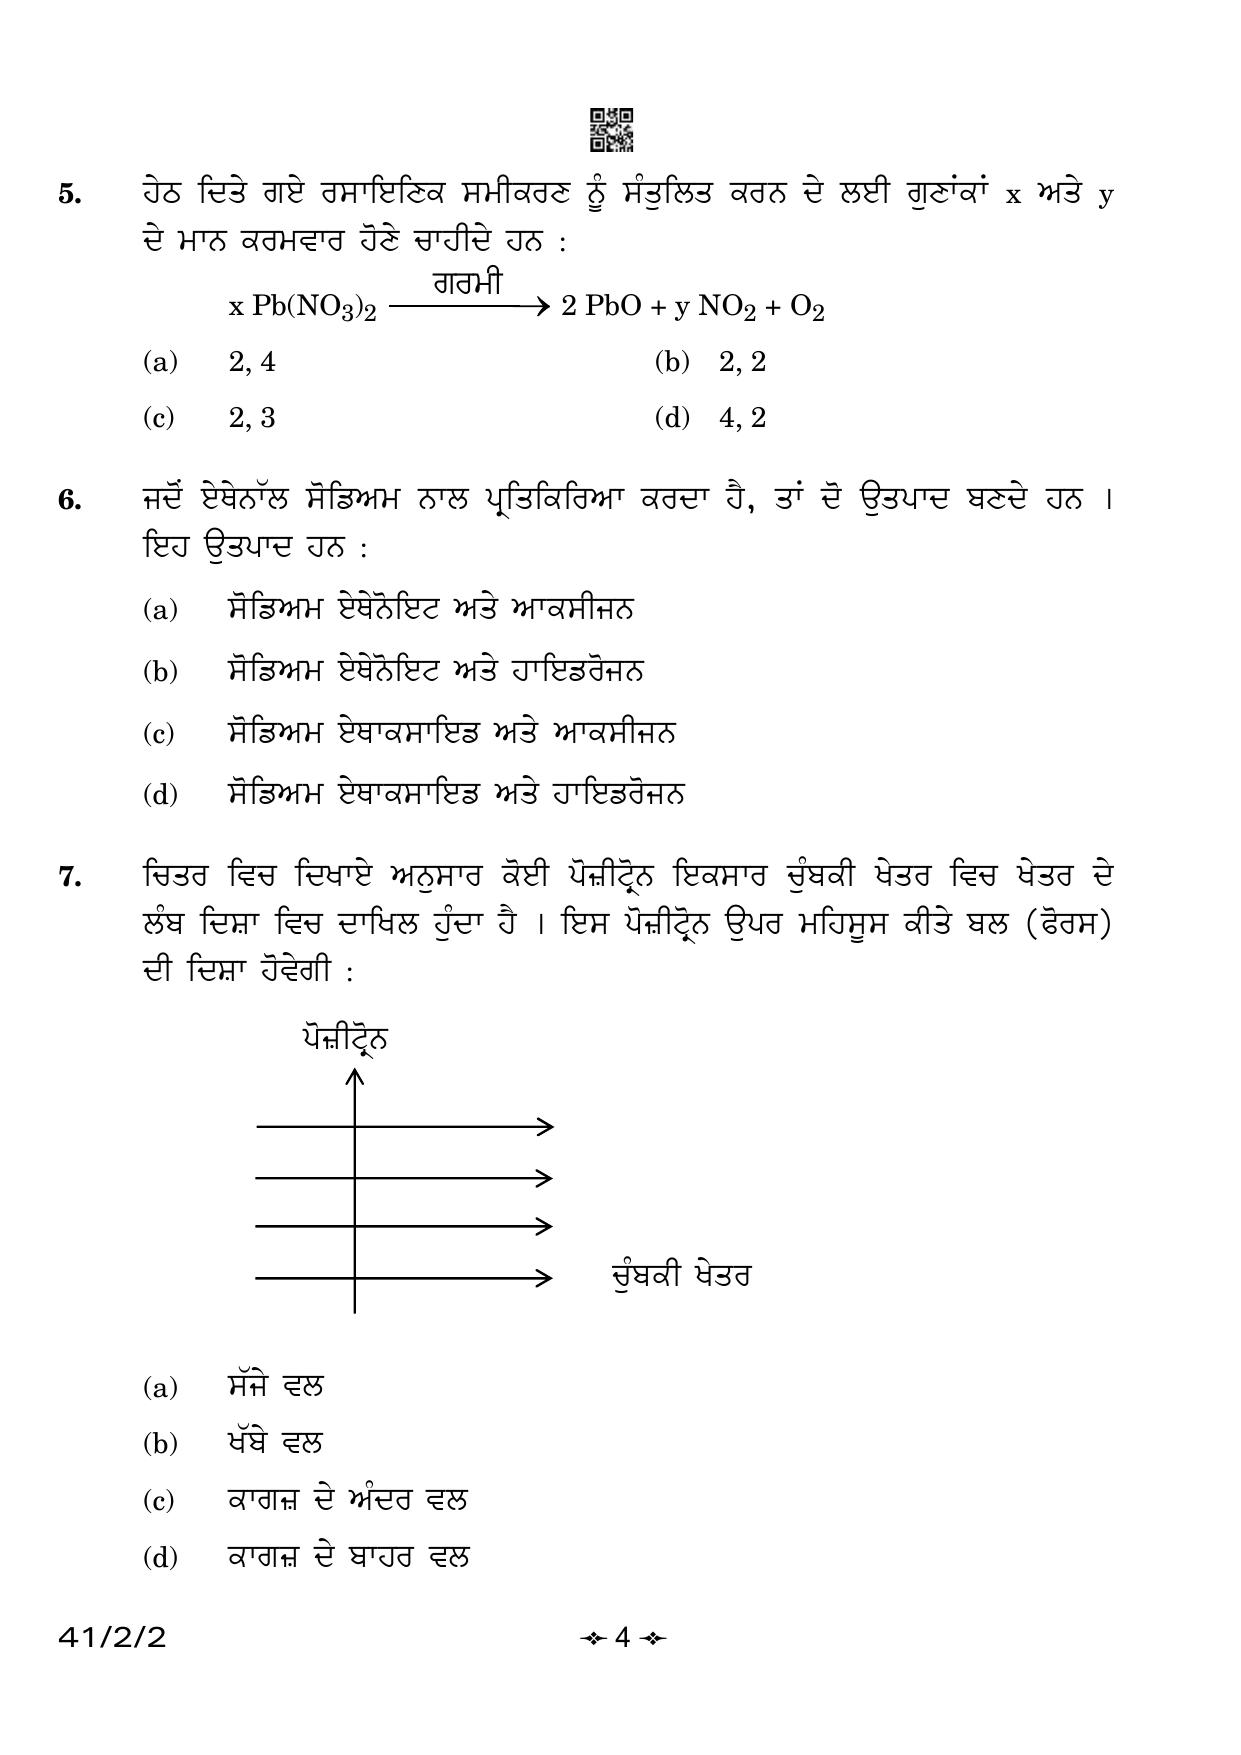 CBSE Class 10 41-2-2 Science Punjabi Version 2023 Question Paper - Page 4